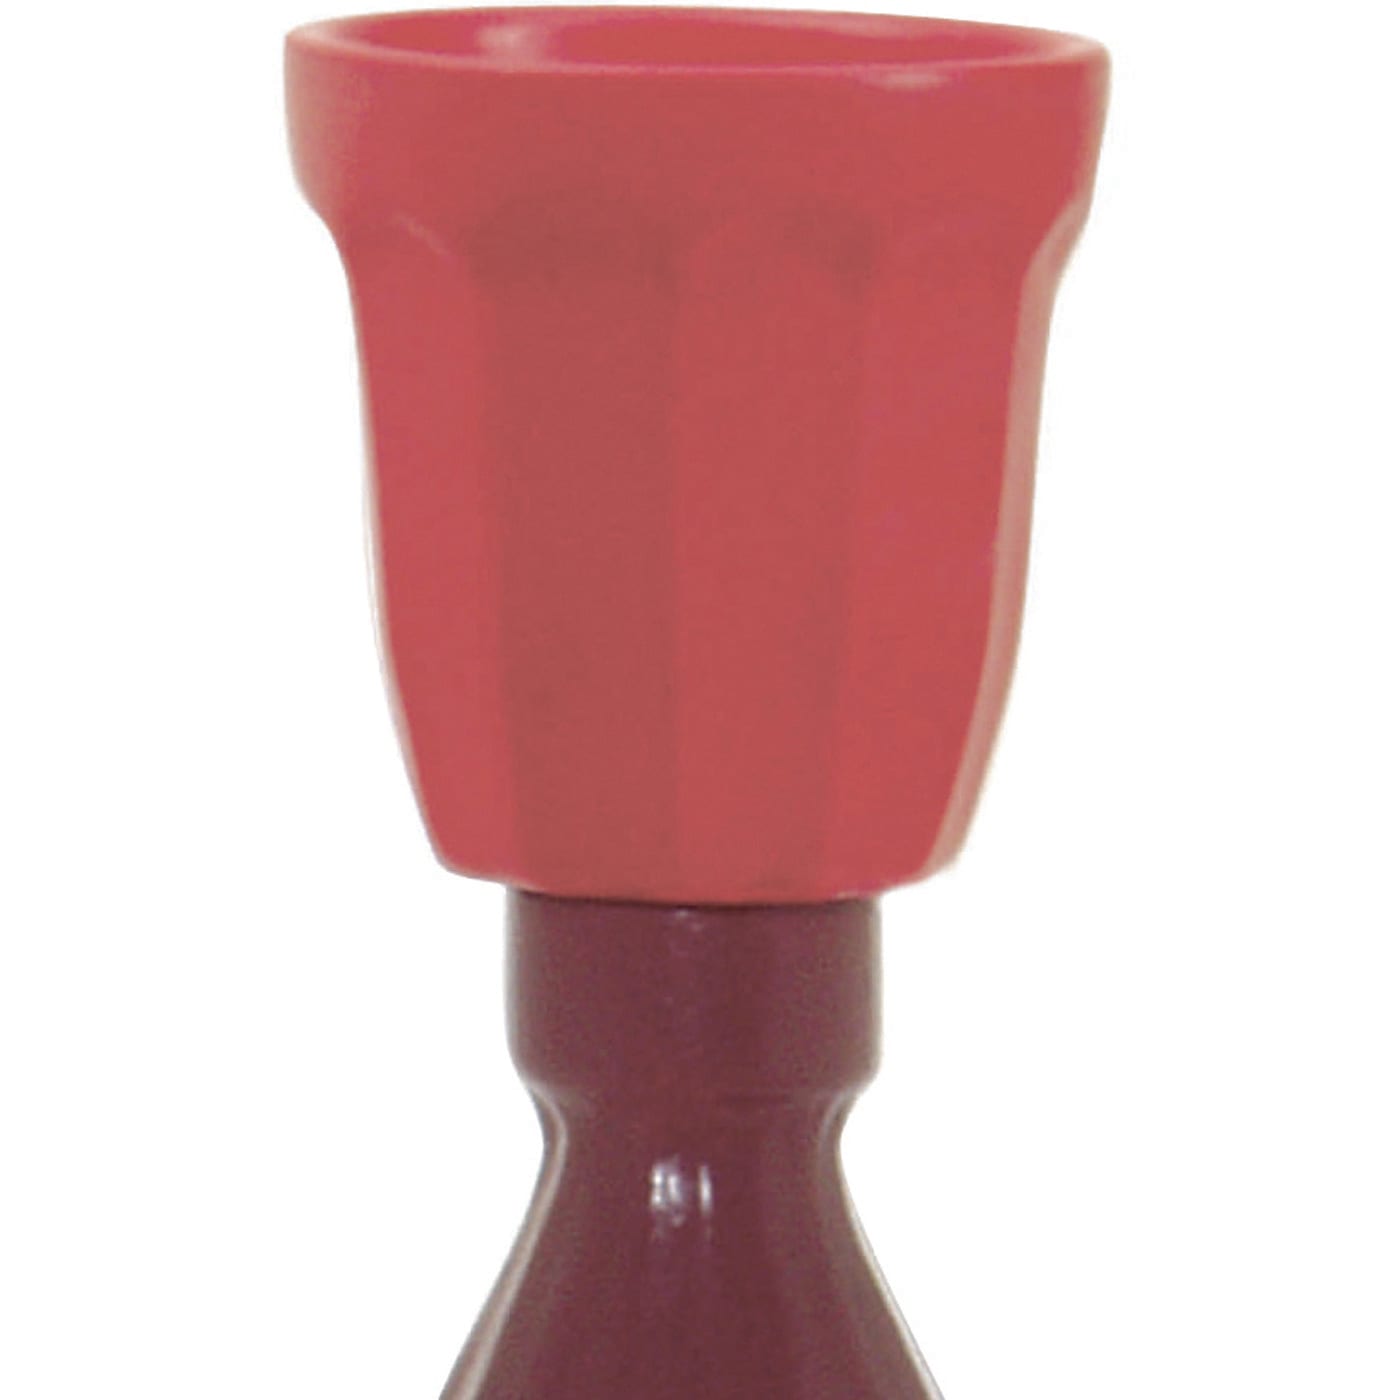 Long Black, White and Red Vase by Natalie Du Pasquier - Bitossi Ceramiche